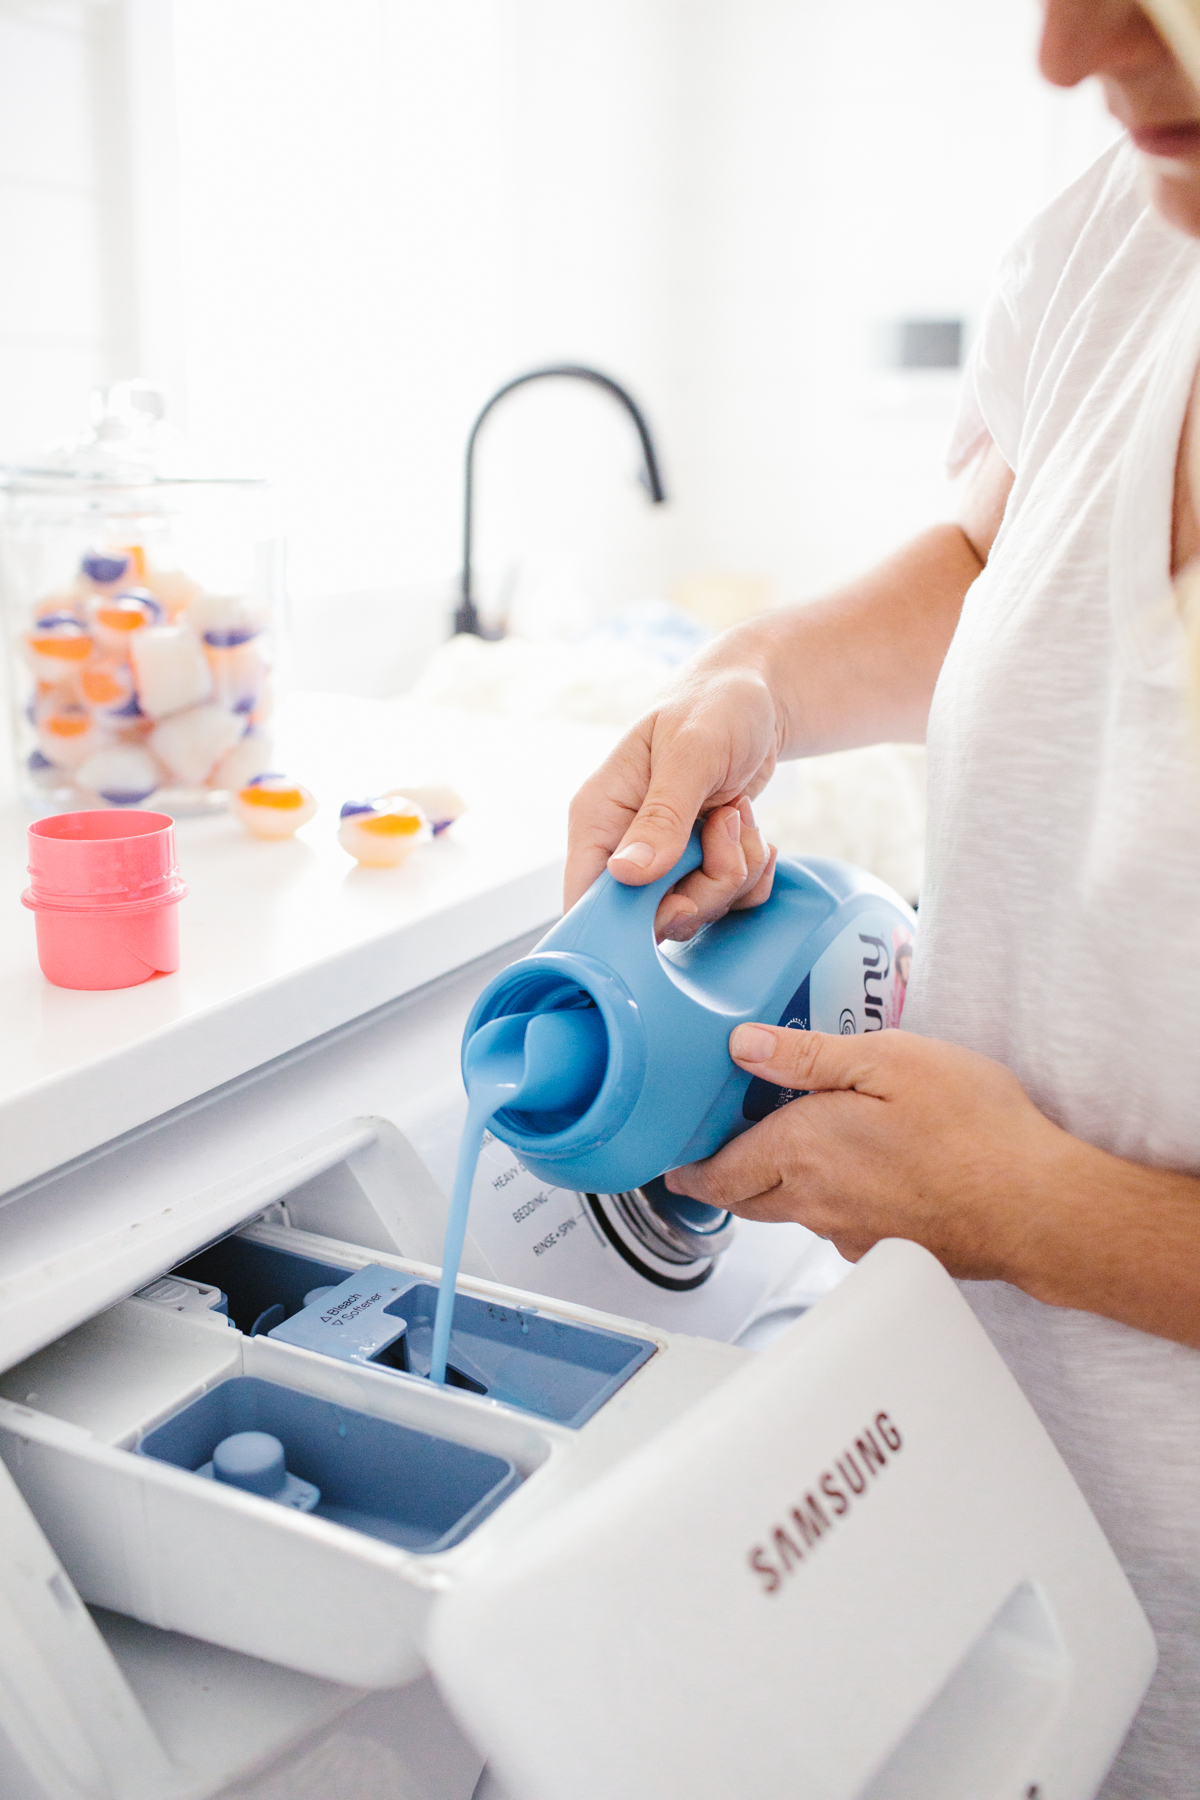 Monika pouring fabric conditioner into washing machine